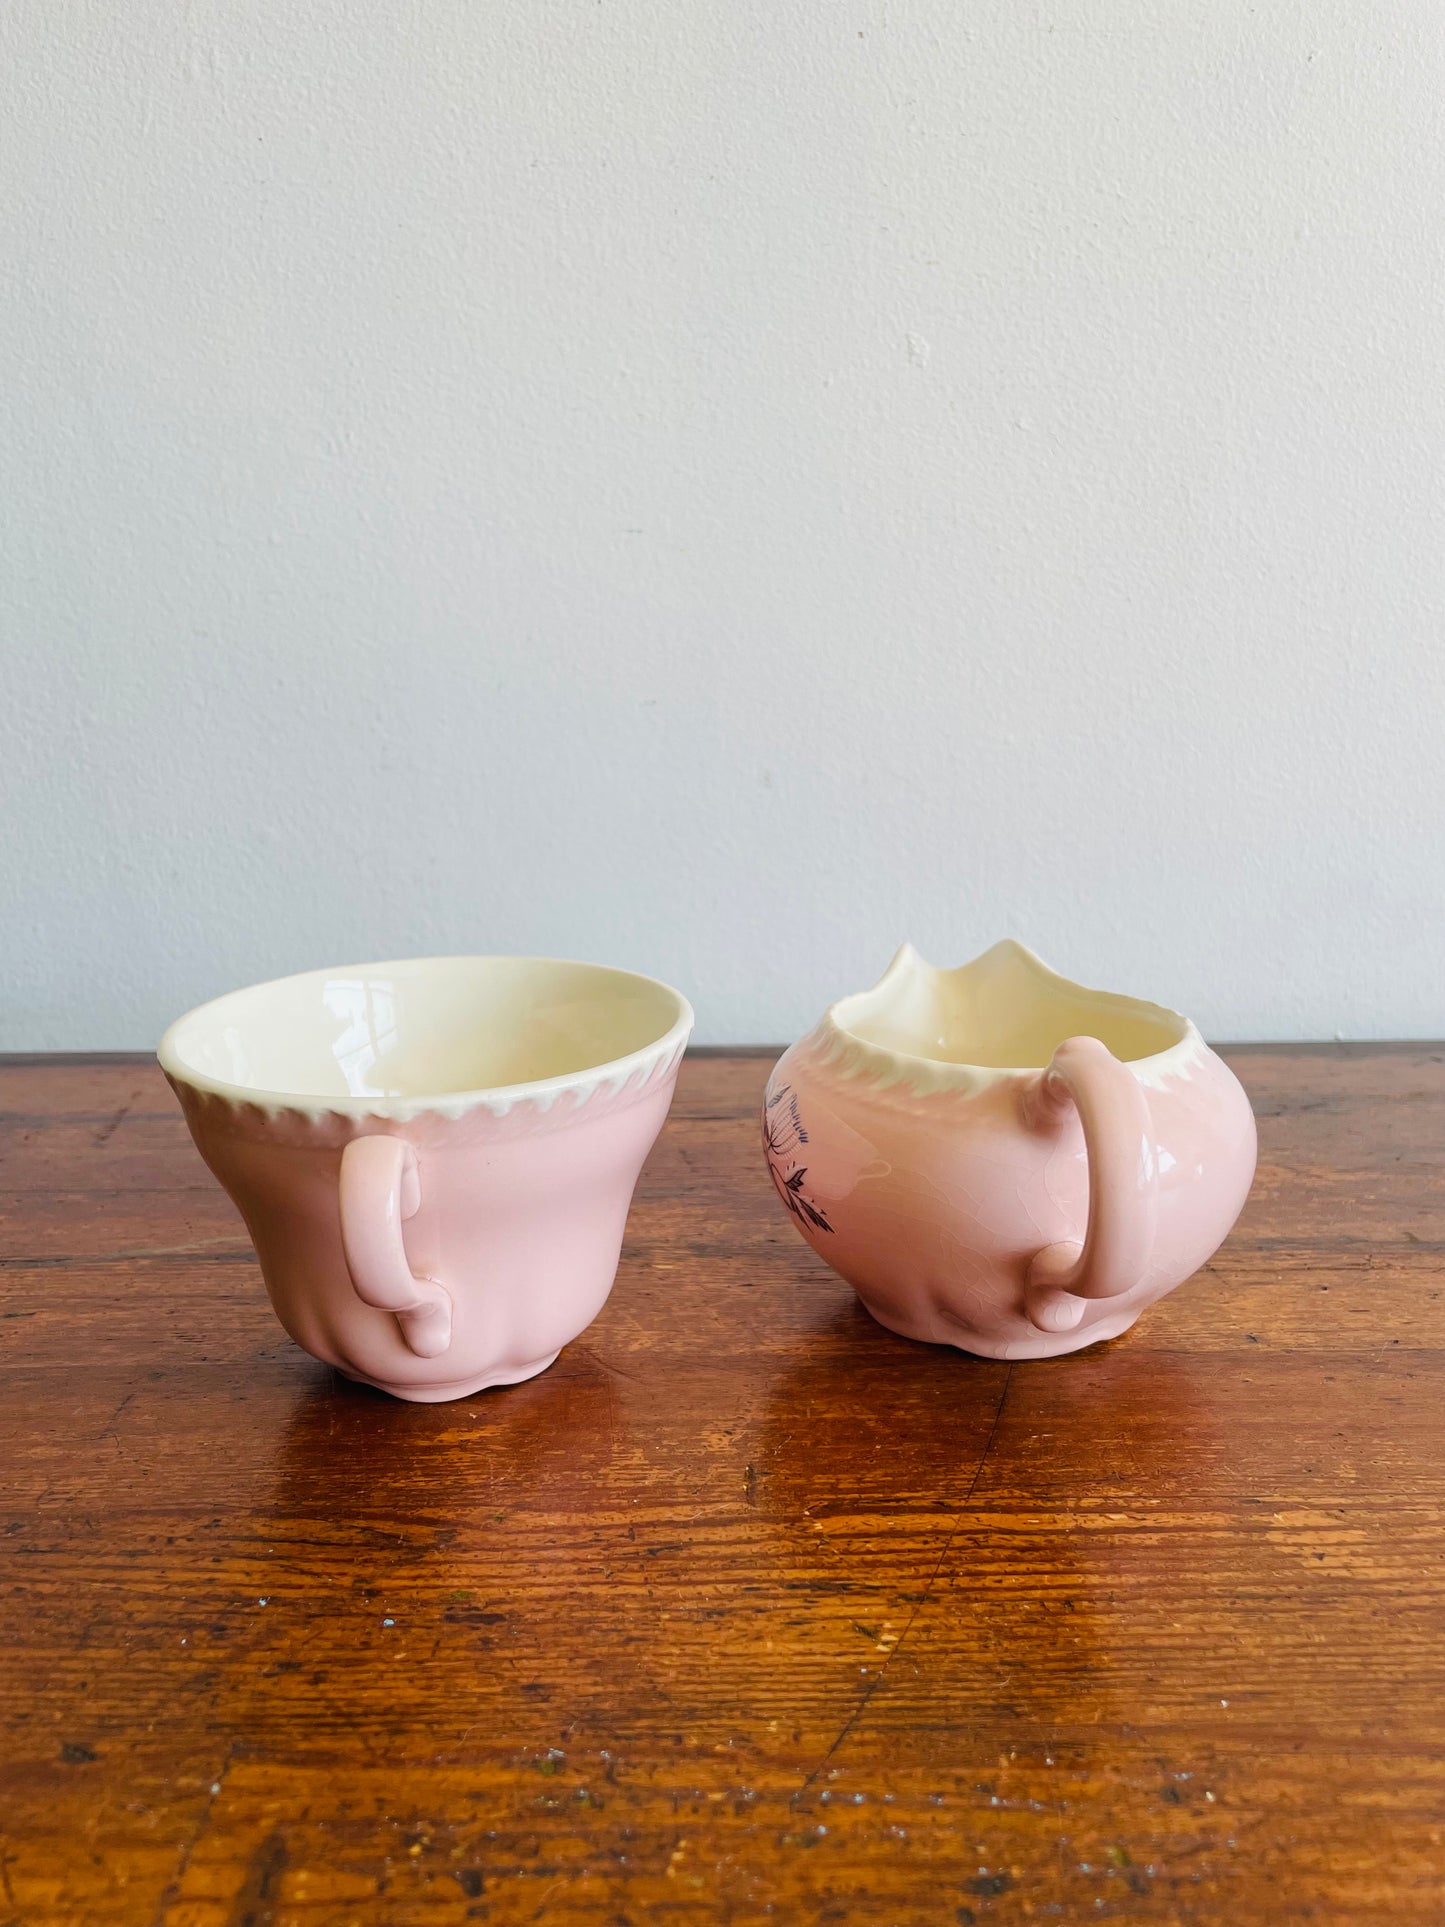 Harkerware Pink Corinthian Tea Cup & Creamer Set - 2 Pieces - Made in USA